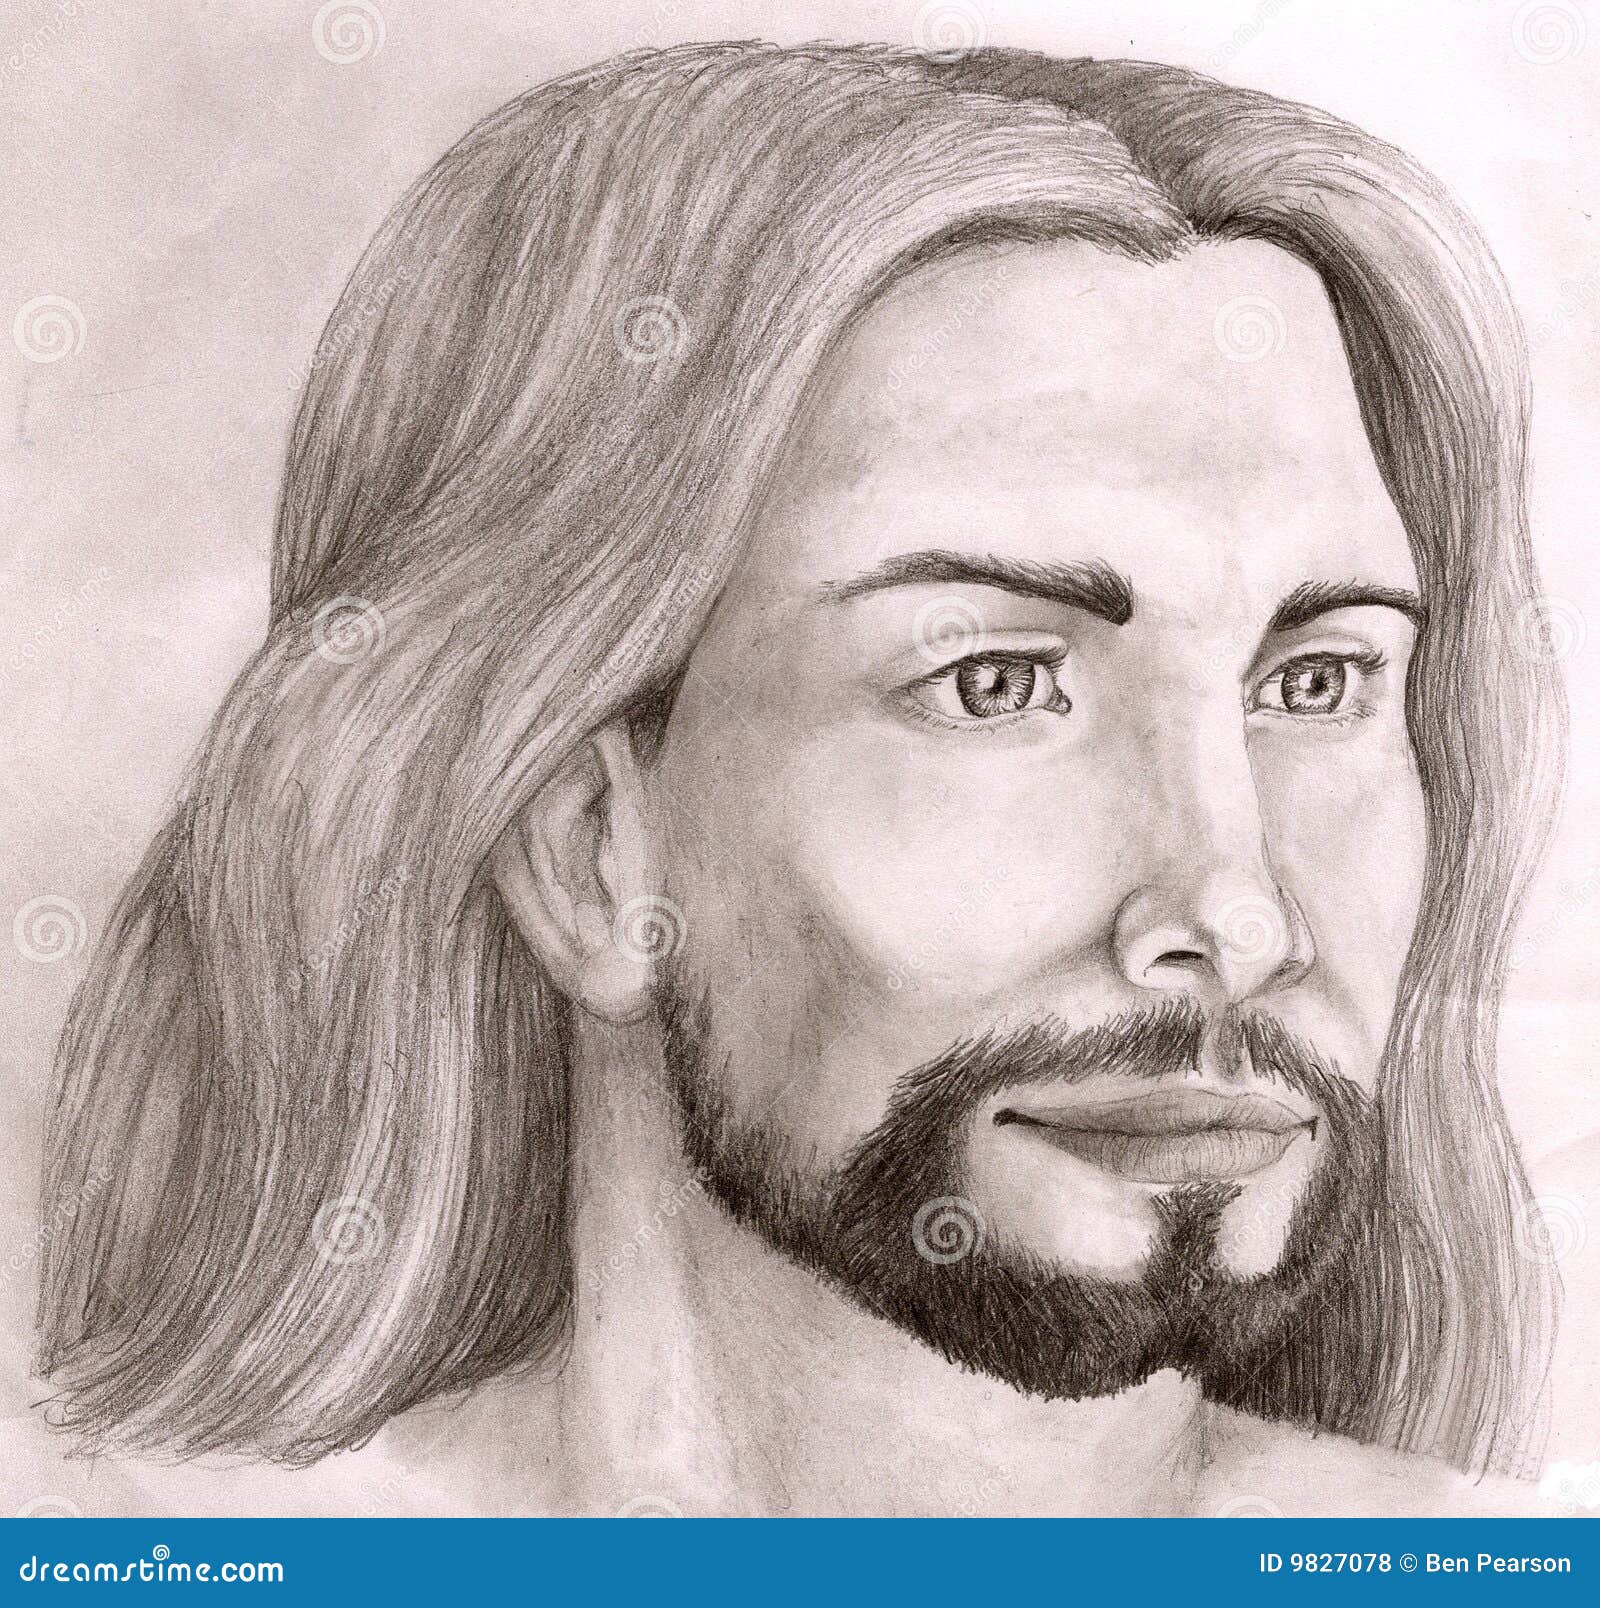 Old pencil drawing of Jesus Christ by StachRogalski on DeviantArt